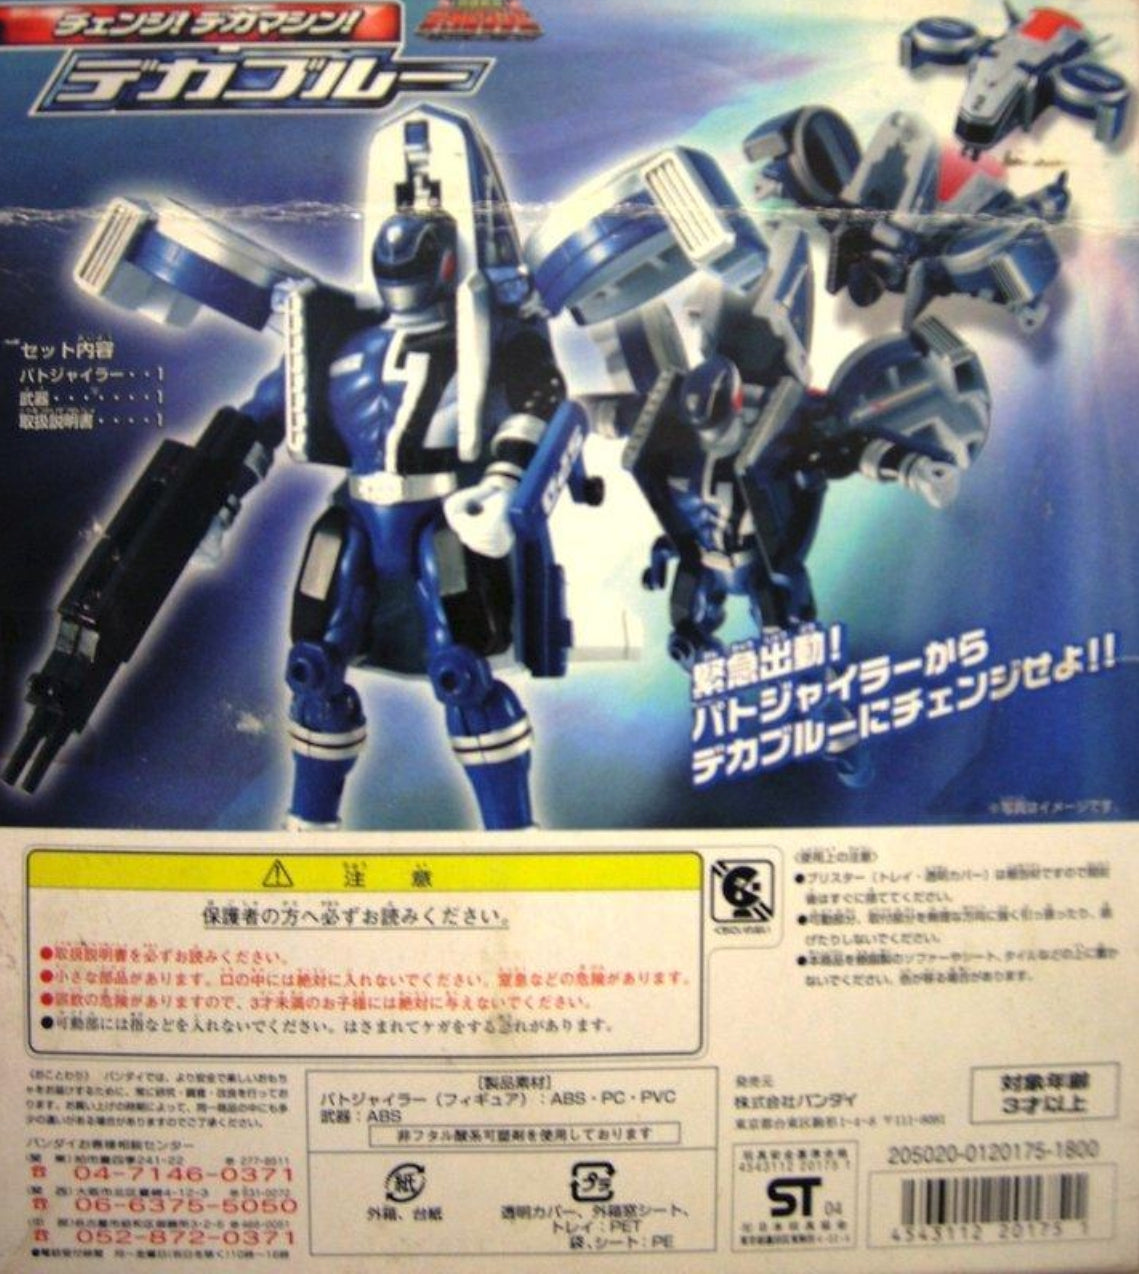 Bandai Power Rangers Dekaranger SPD Space Patrol Delta Blue Jet Action Figure Used